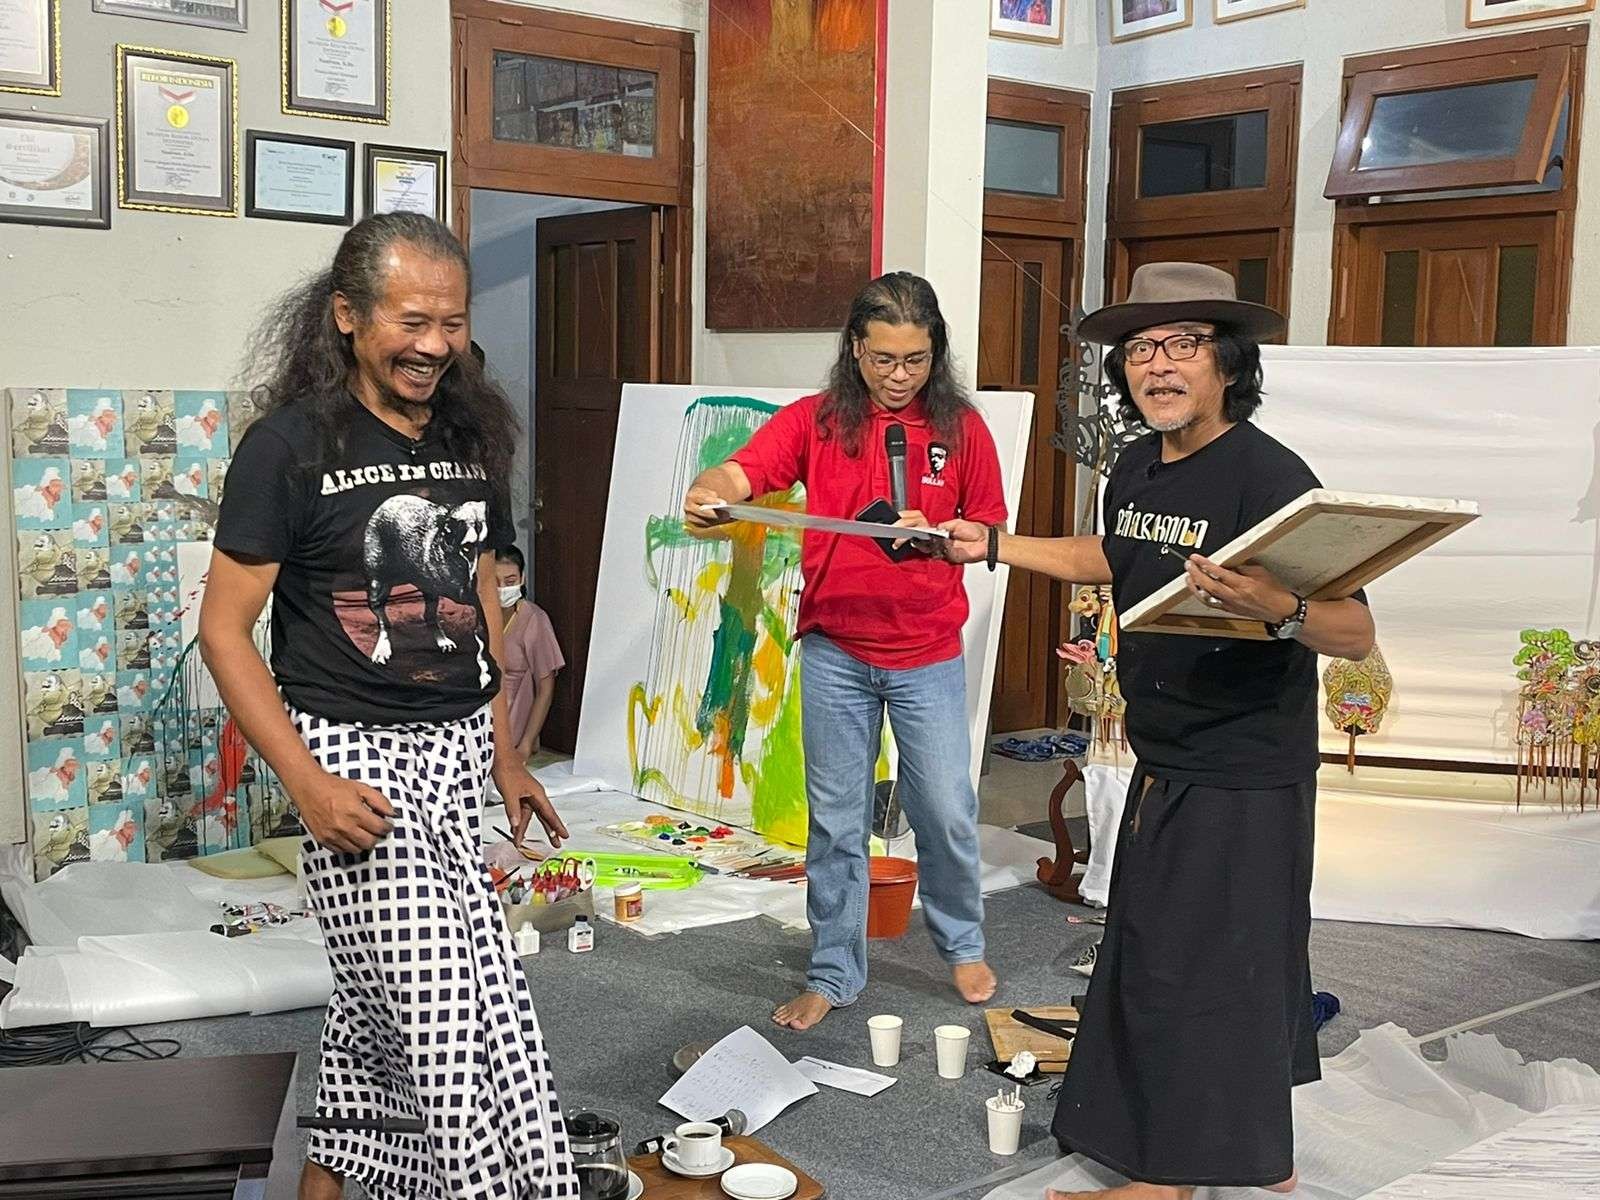 Kolaborasi Sujiwo Tejo dengan Nasirun, perupa yang karyanya bernilai ratusan juta melukis bareng sambil rekaman podcast. Ada katrol mengatrol antara seniman pemula dengan seniman maestro. (Foto: Istimewa)